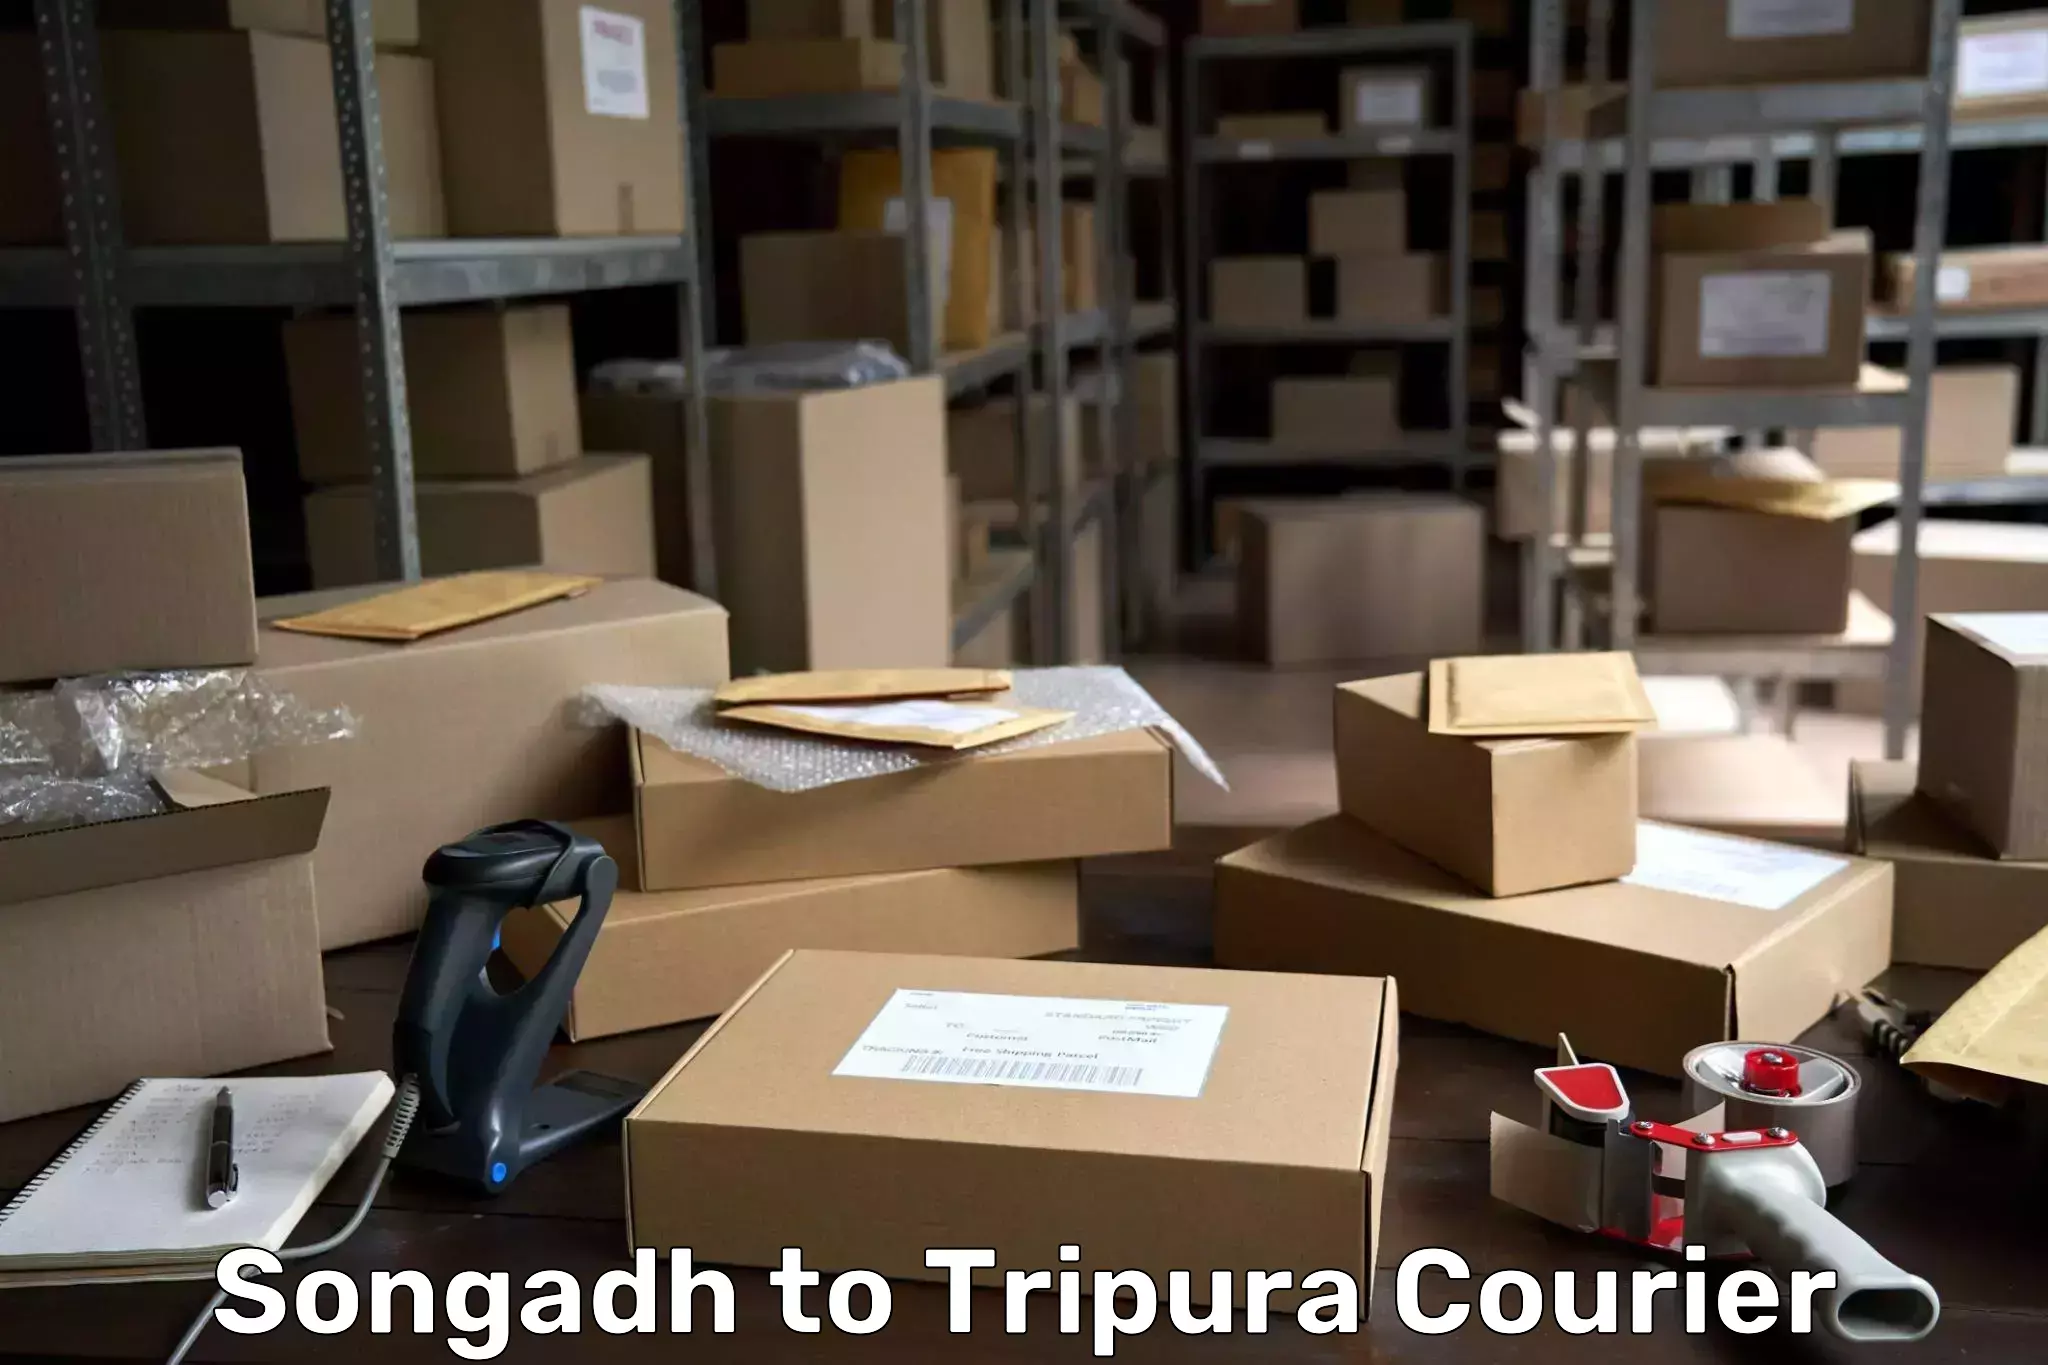 Efficient order fulfillment Songadh to Udaipur Tripura